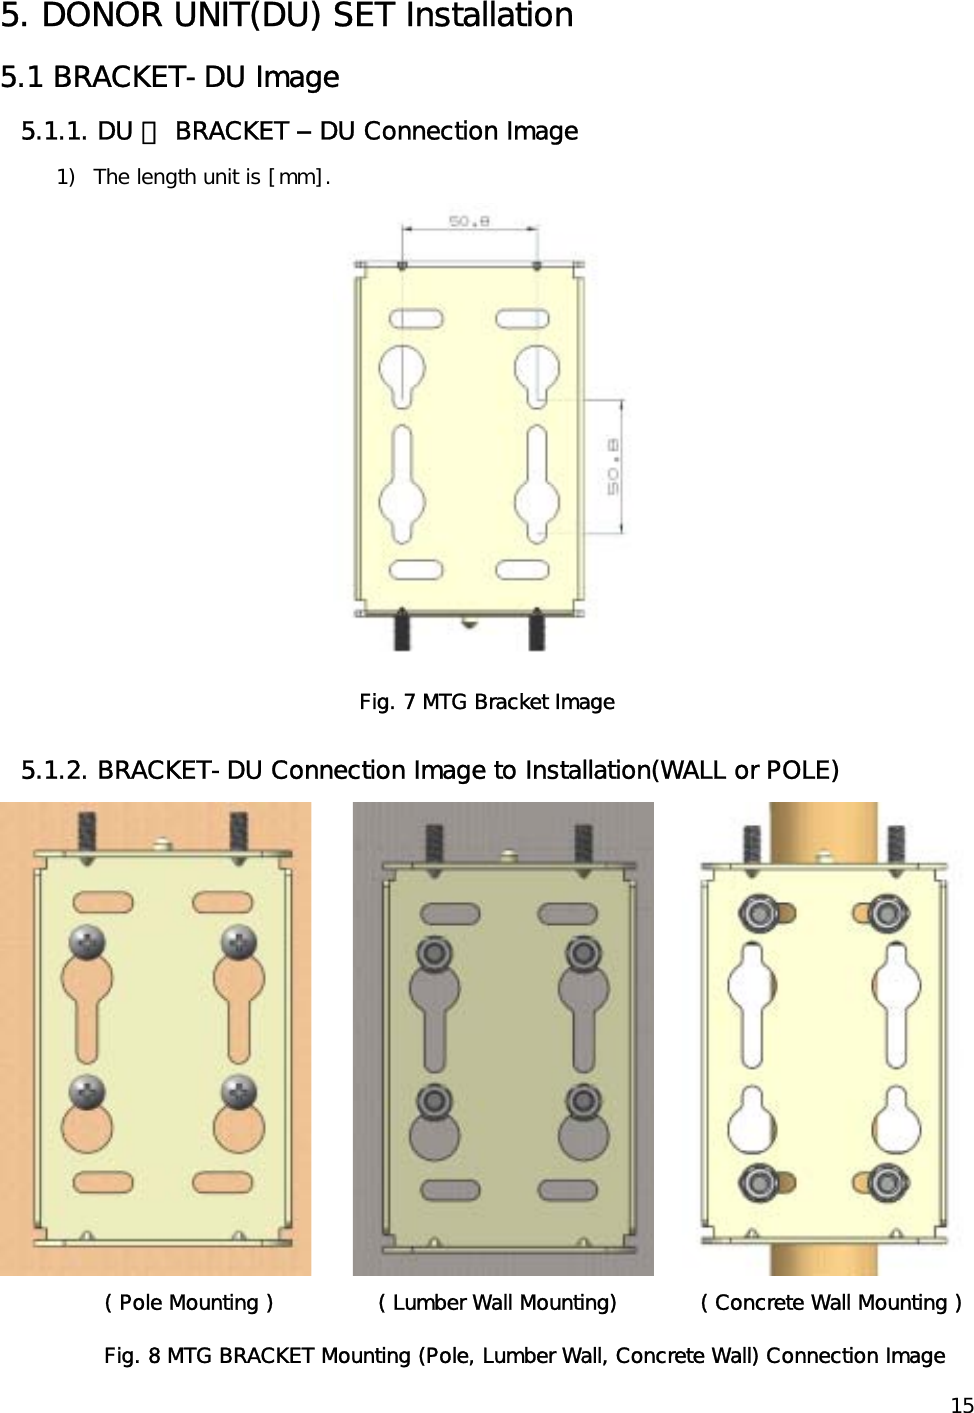    15 5. DONOR UNIT(DU) SET Installation 5.1 BRACKET-DU Image  5.1.1. DU 에 BRACKET – DU Connection Image  1)  The length unit is [mm].  Fig. 7 MTG Bracket Image 5.1.2. BRACKET-DU Connection Image to Installation(WALL or POLE)               ( Pole Mounting )               ( Lumber Wall Mounting)            ( Concrete Wall Mounting ) Fig. 8 MTG BRACKET Mounting (Pole, Lumber Wall, Concrete Wall) Connection Image 